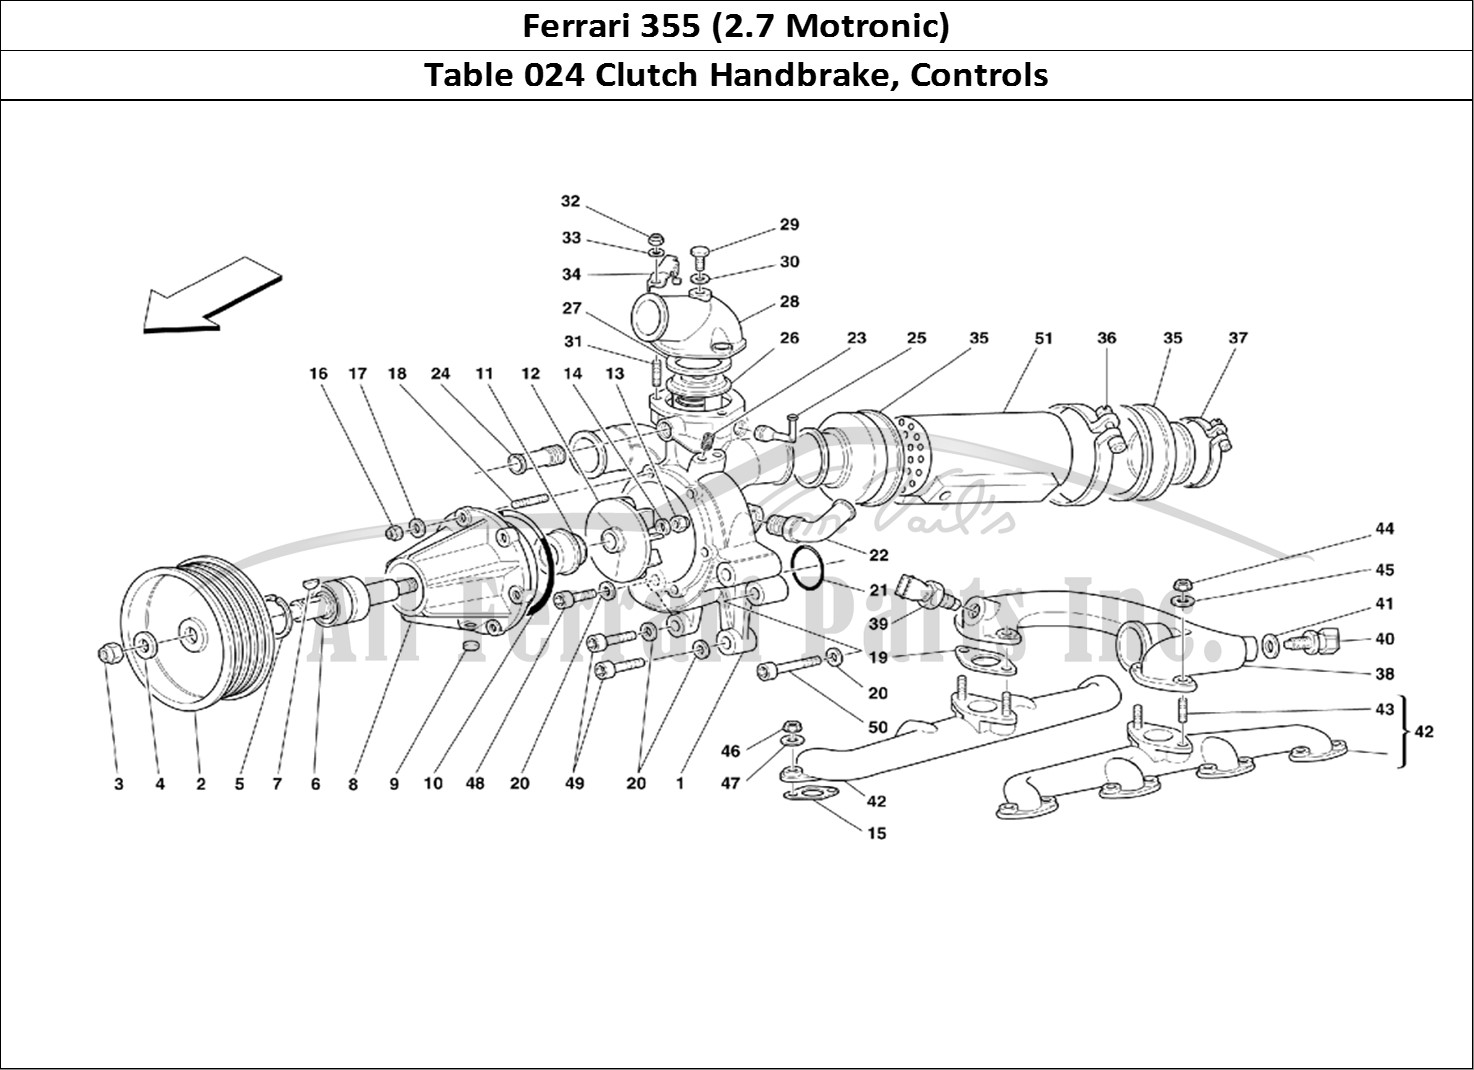 Ferrari Parts Ferrari 355 (2.7 Motronic) Page 024 Clutch and Controls